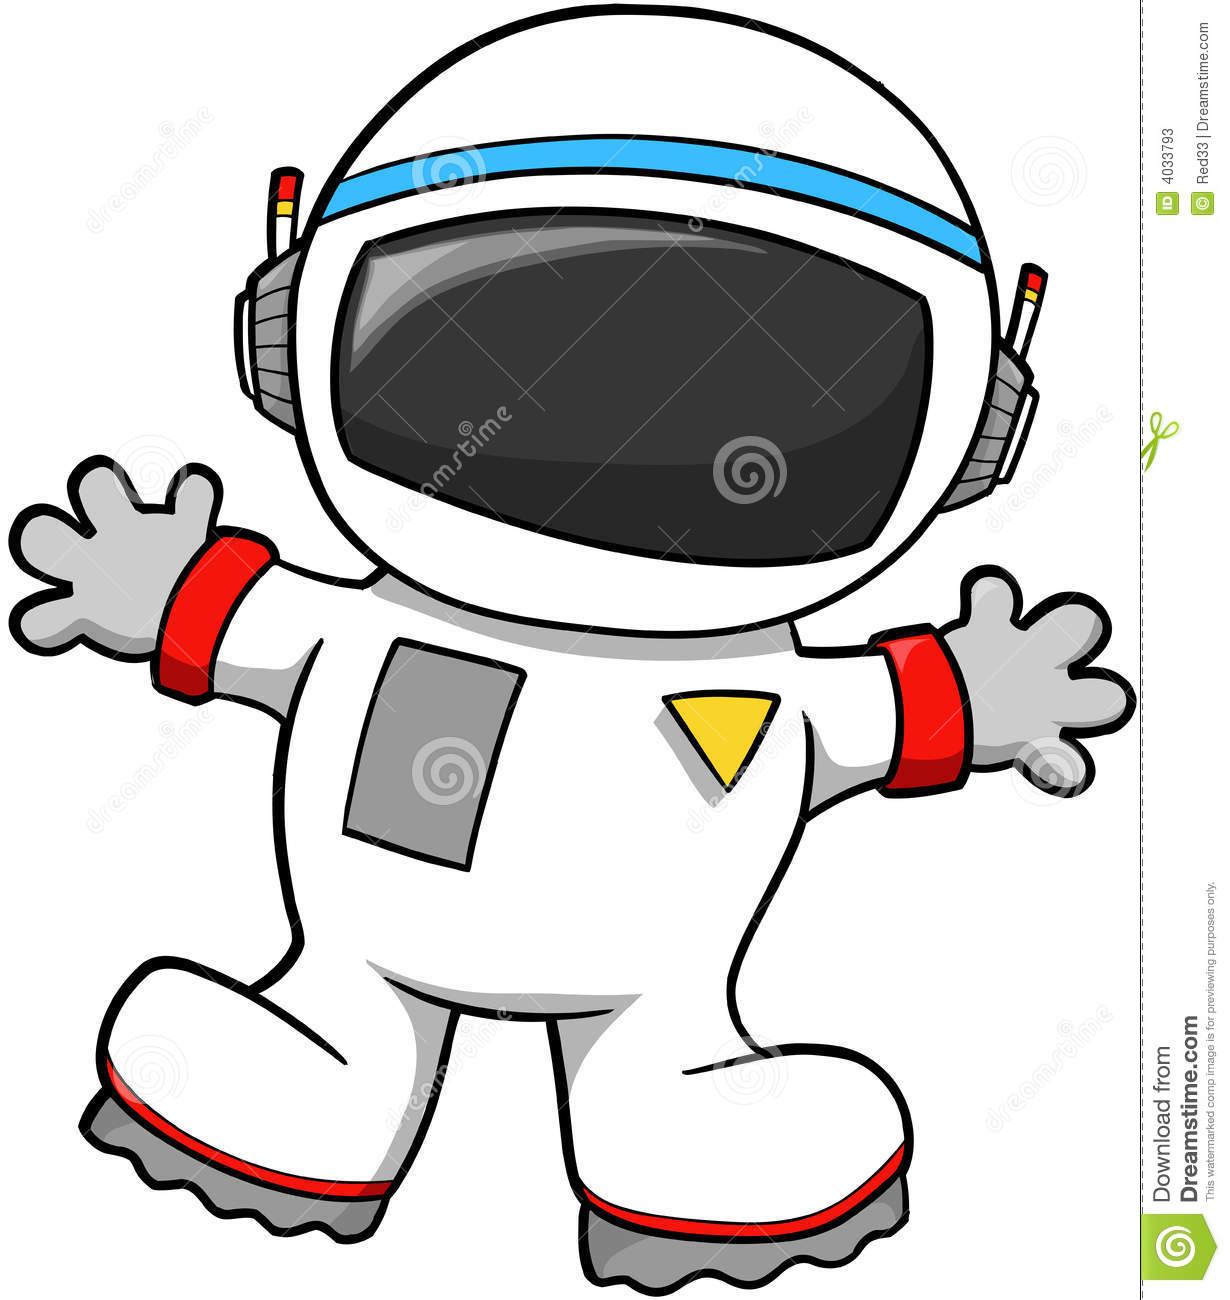 Astronaut Vector Stock Photos   Image  4033793